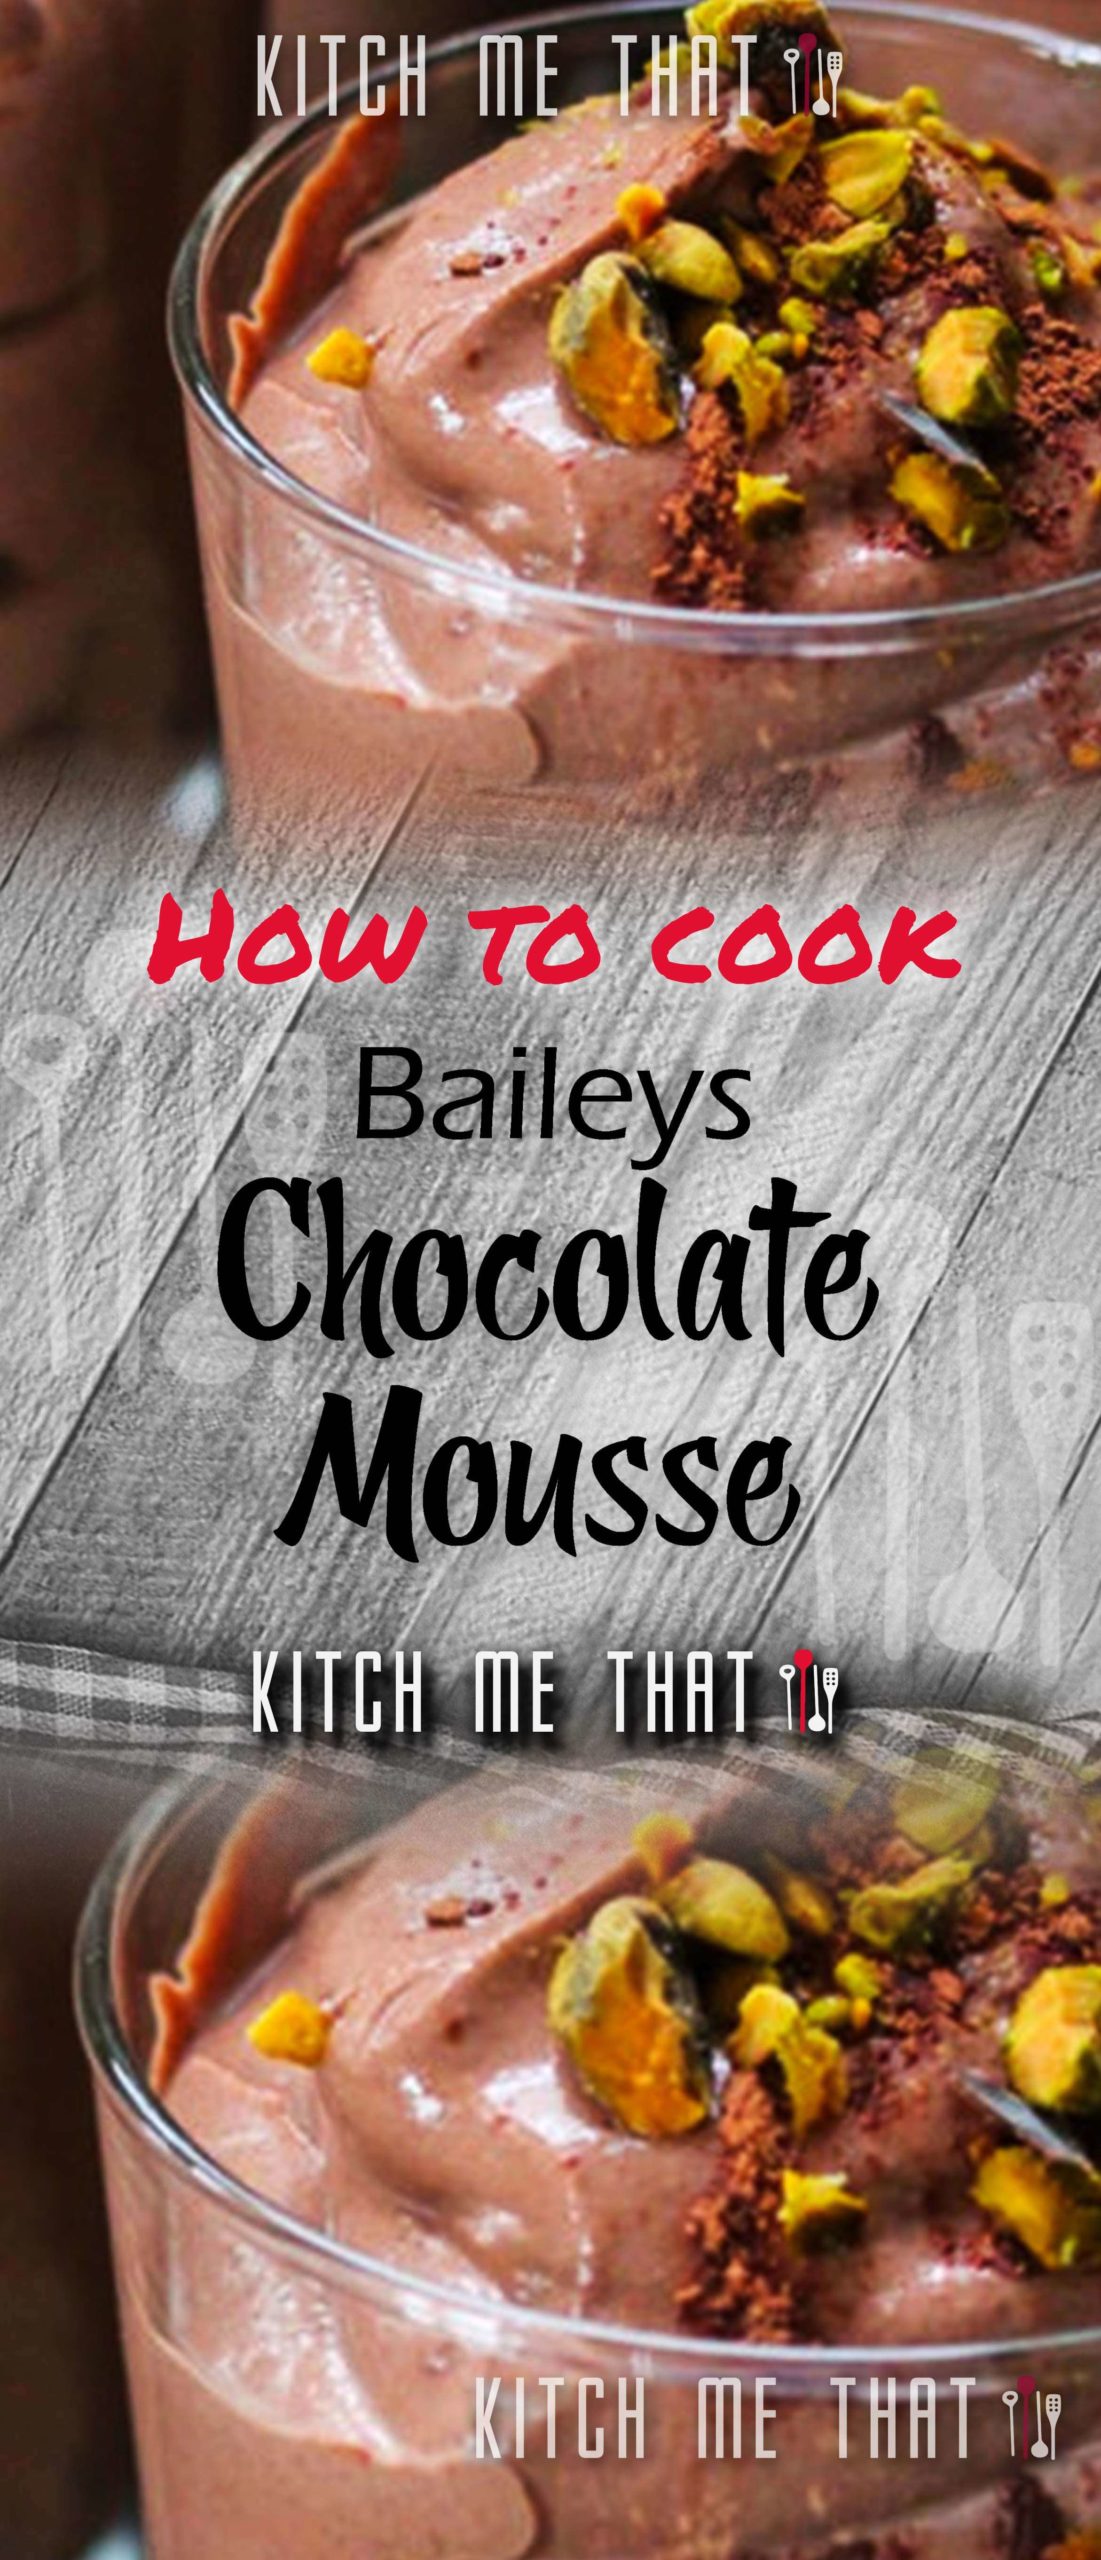 Baileys Chocolate Mousse